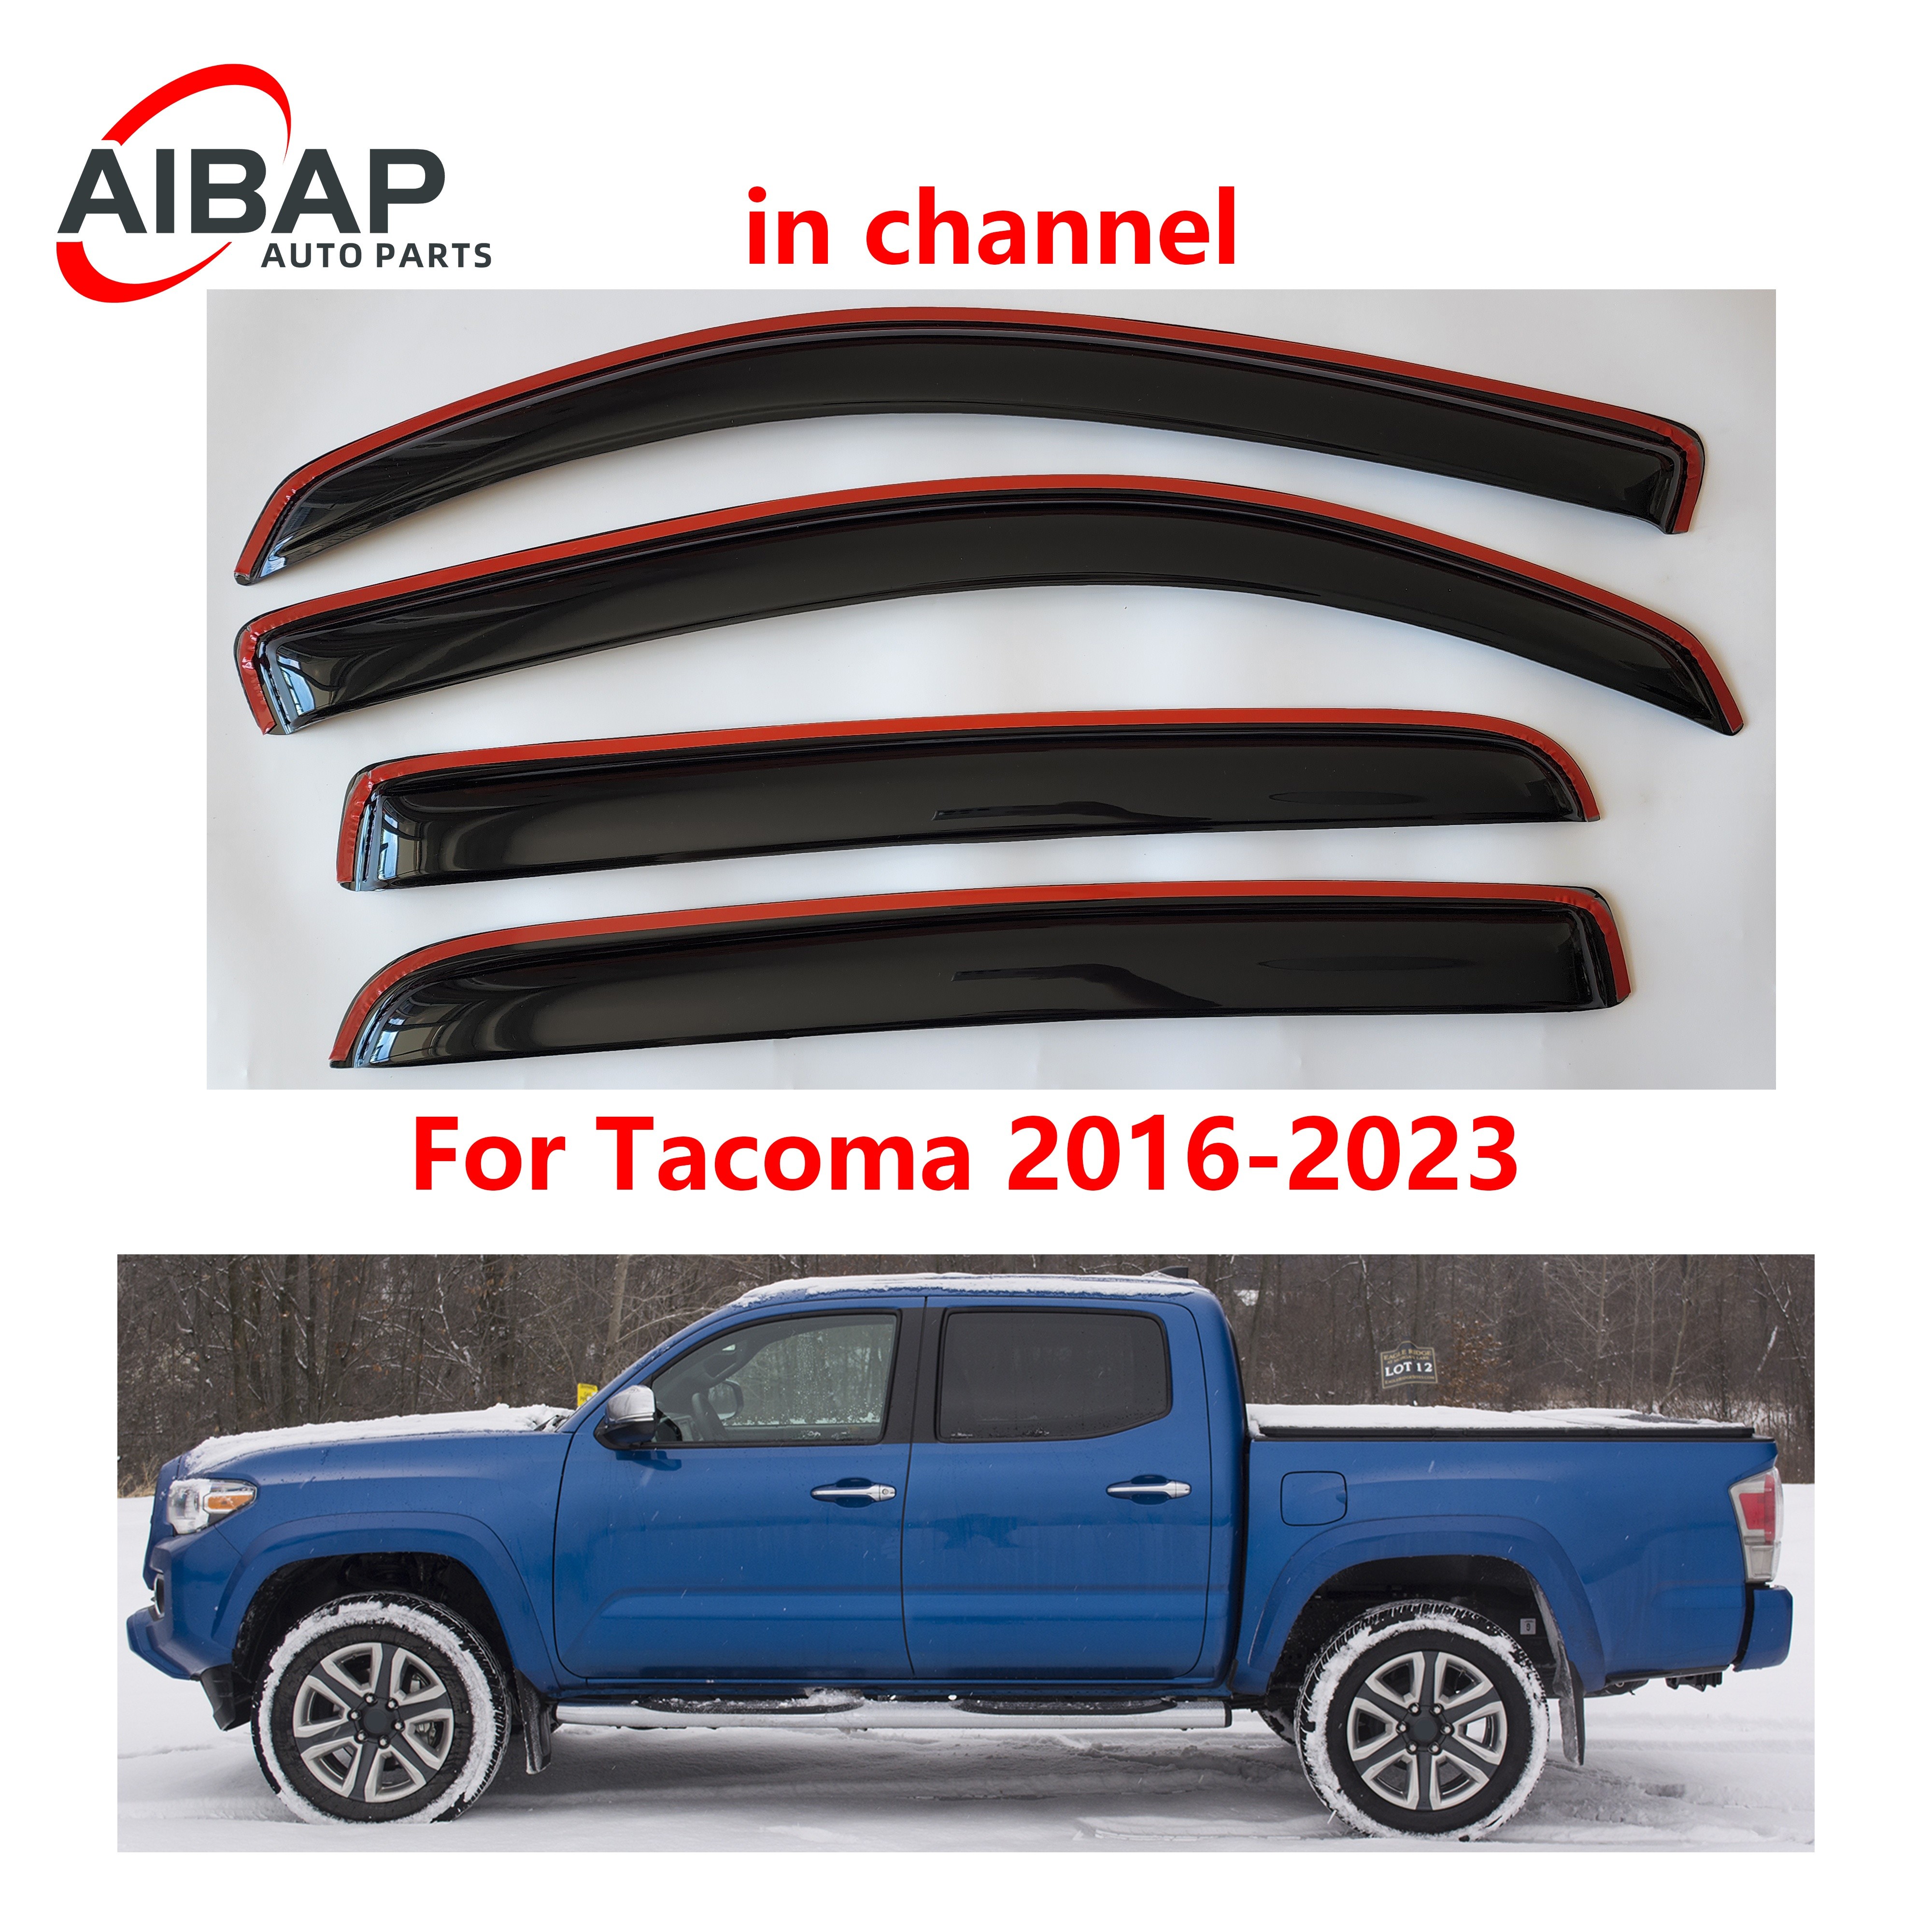 Verdickte 4 Stücke Für Tacoma 2005-2015 Pickup Truck Double Cab